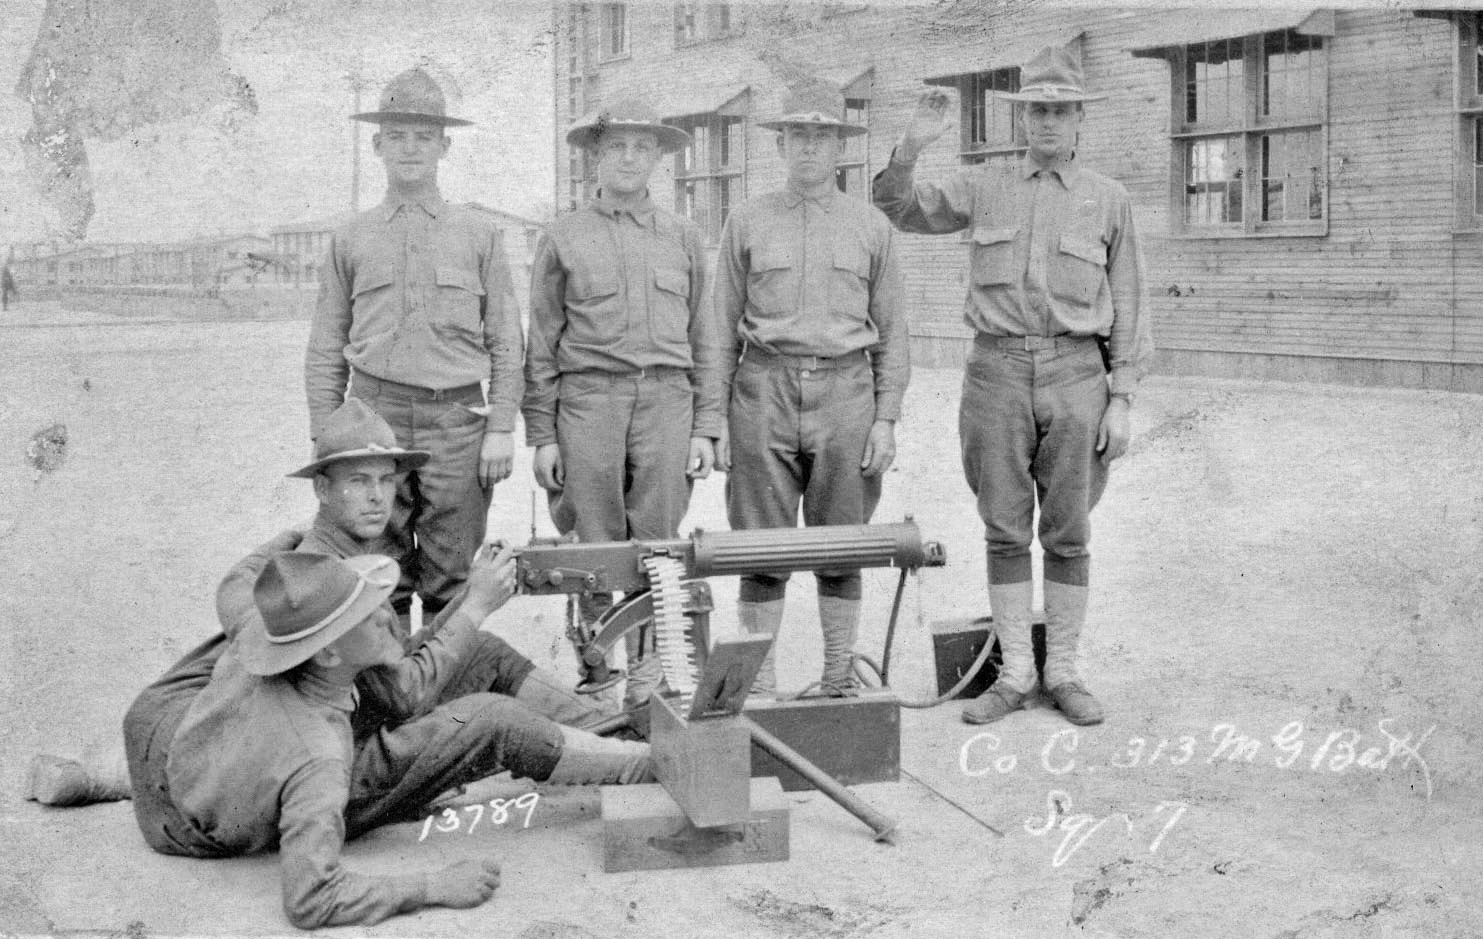 [William L. Toohey manning machine gun] Co. C 313 Machine Gun Battalion, Squad 7]